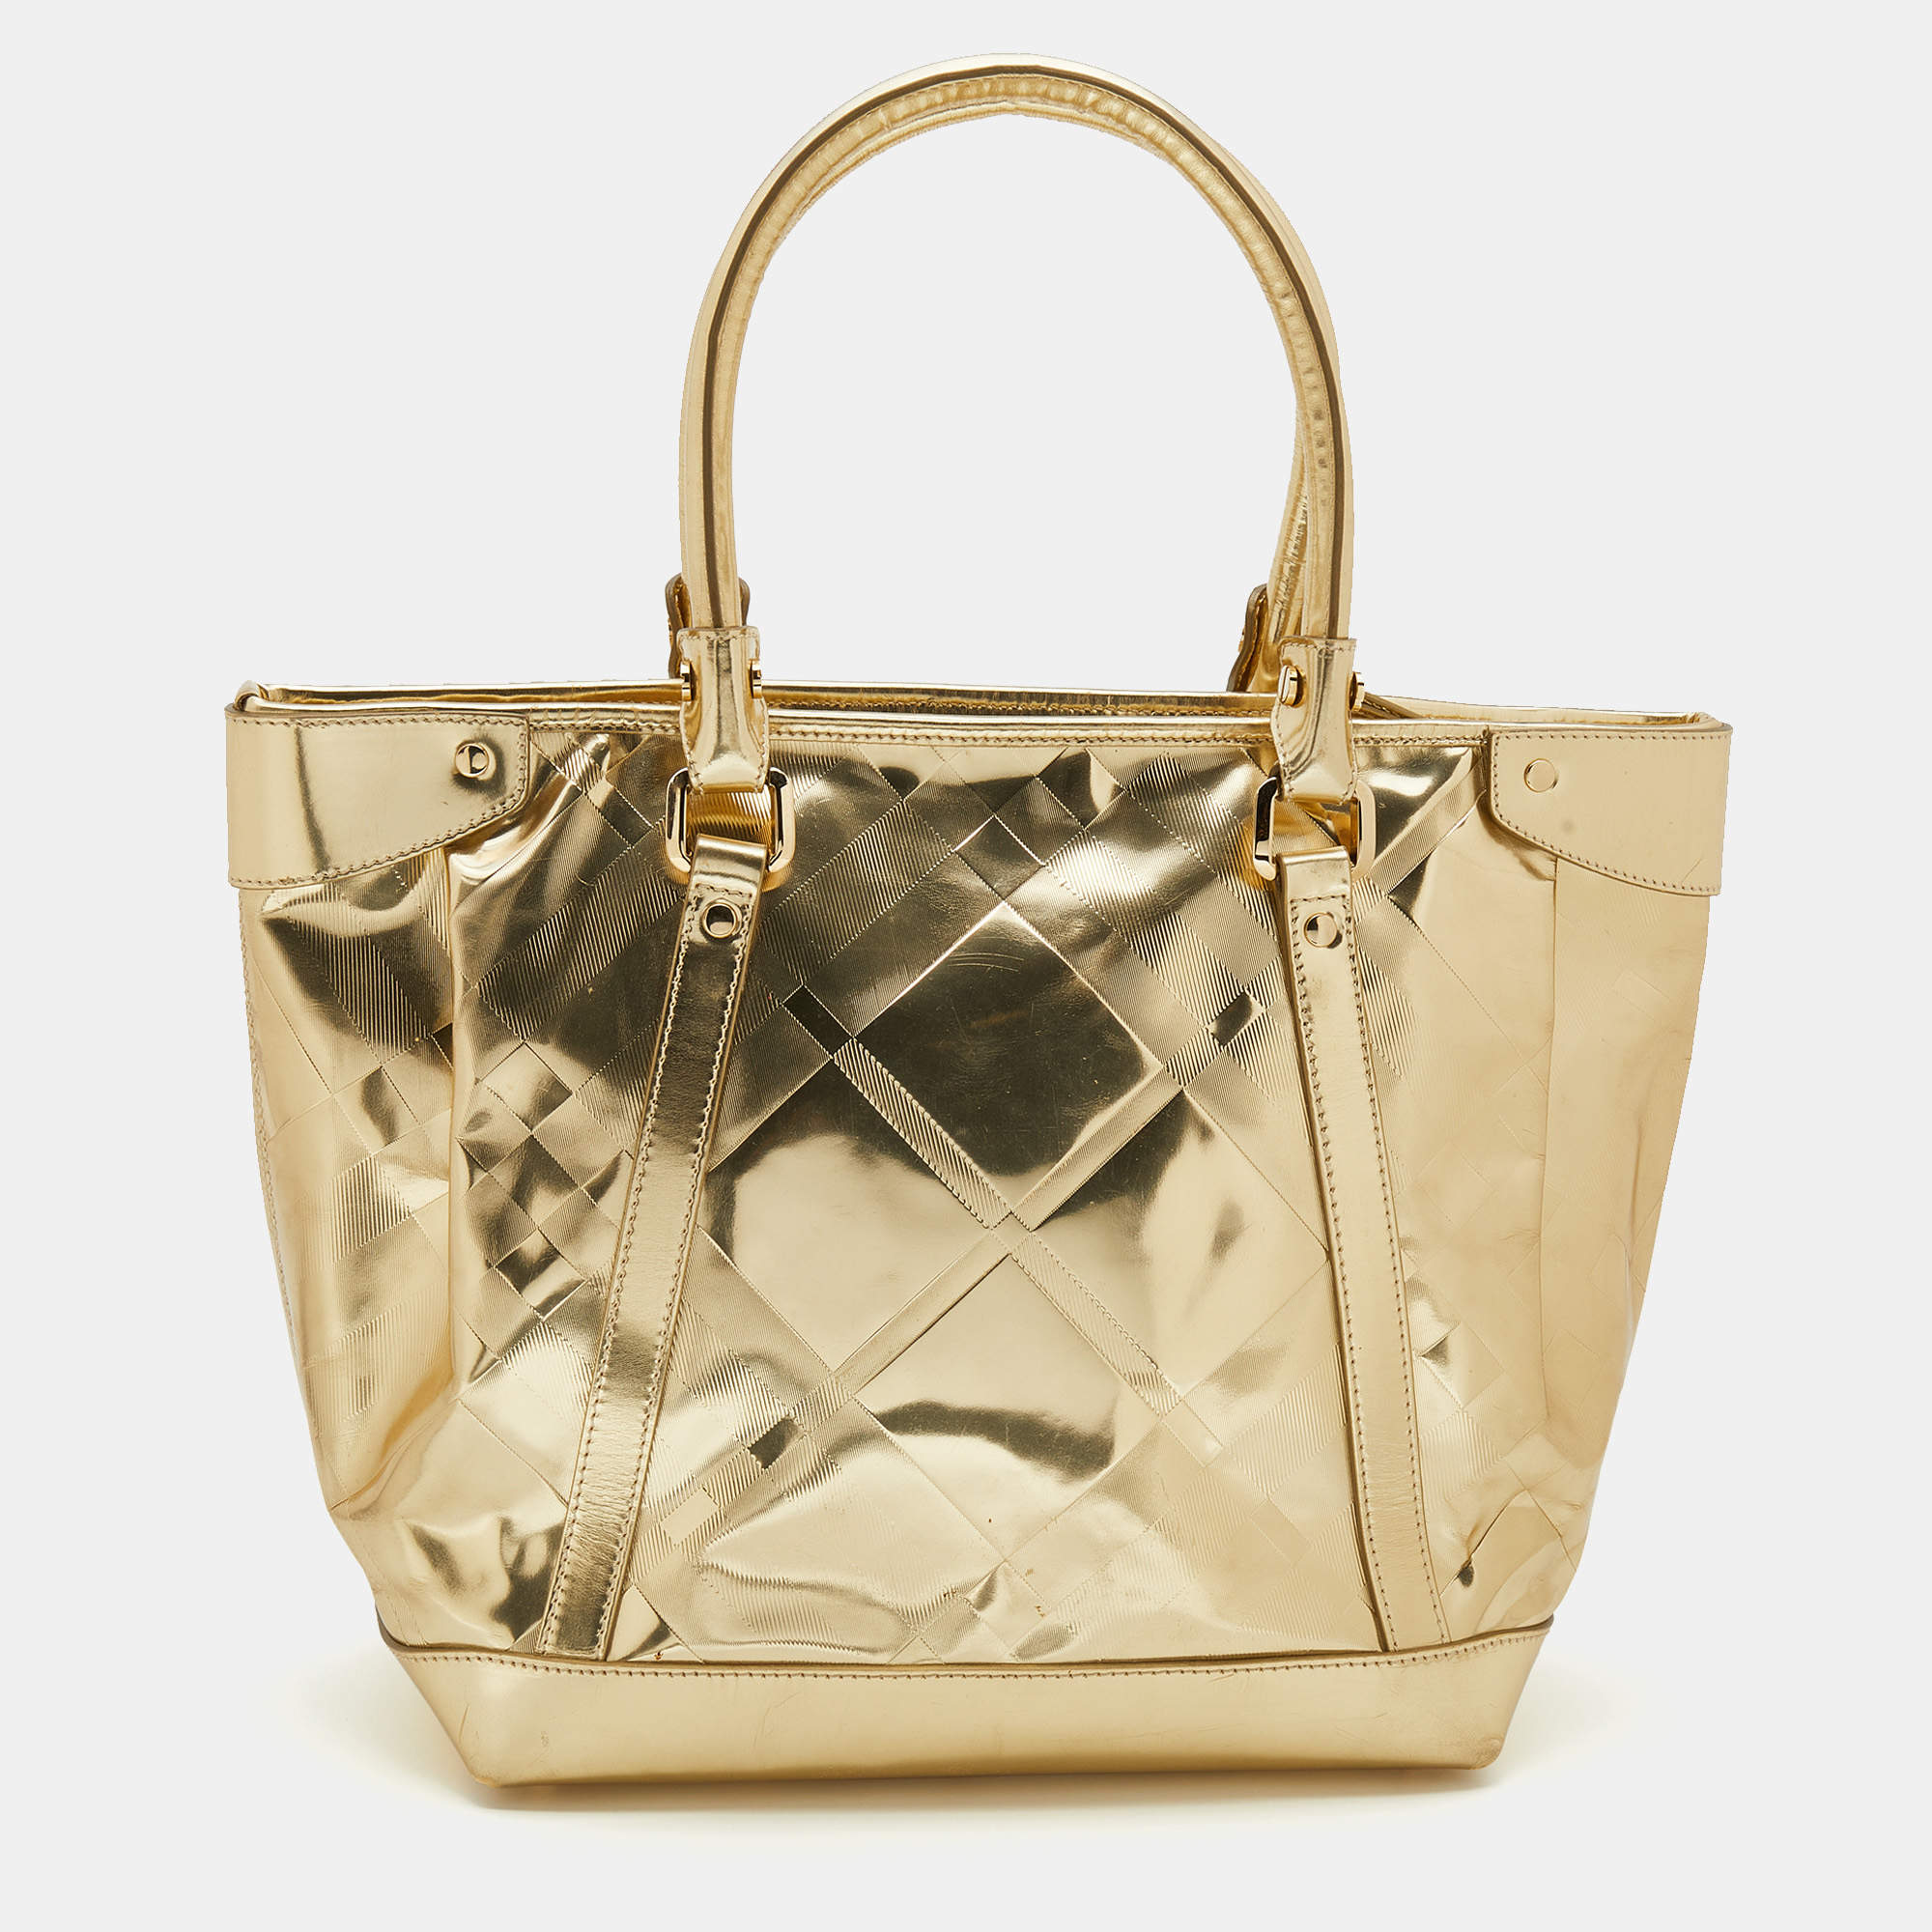 kate spade new york Gold Clutch Bags & Handbags for Women | eBay